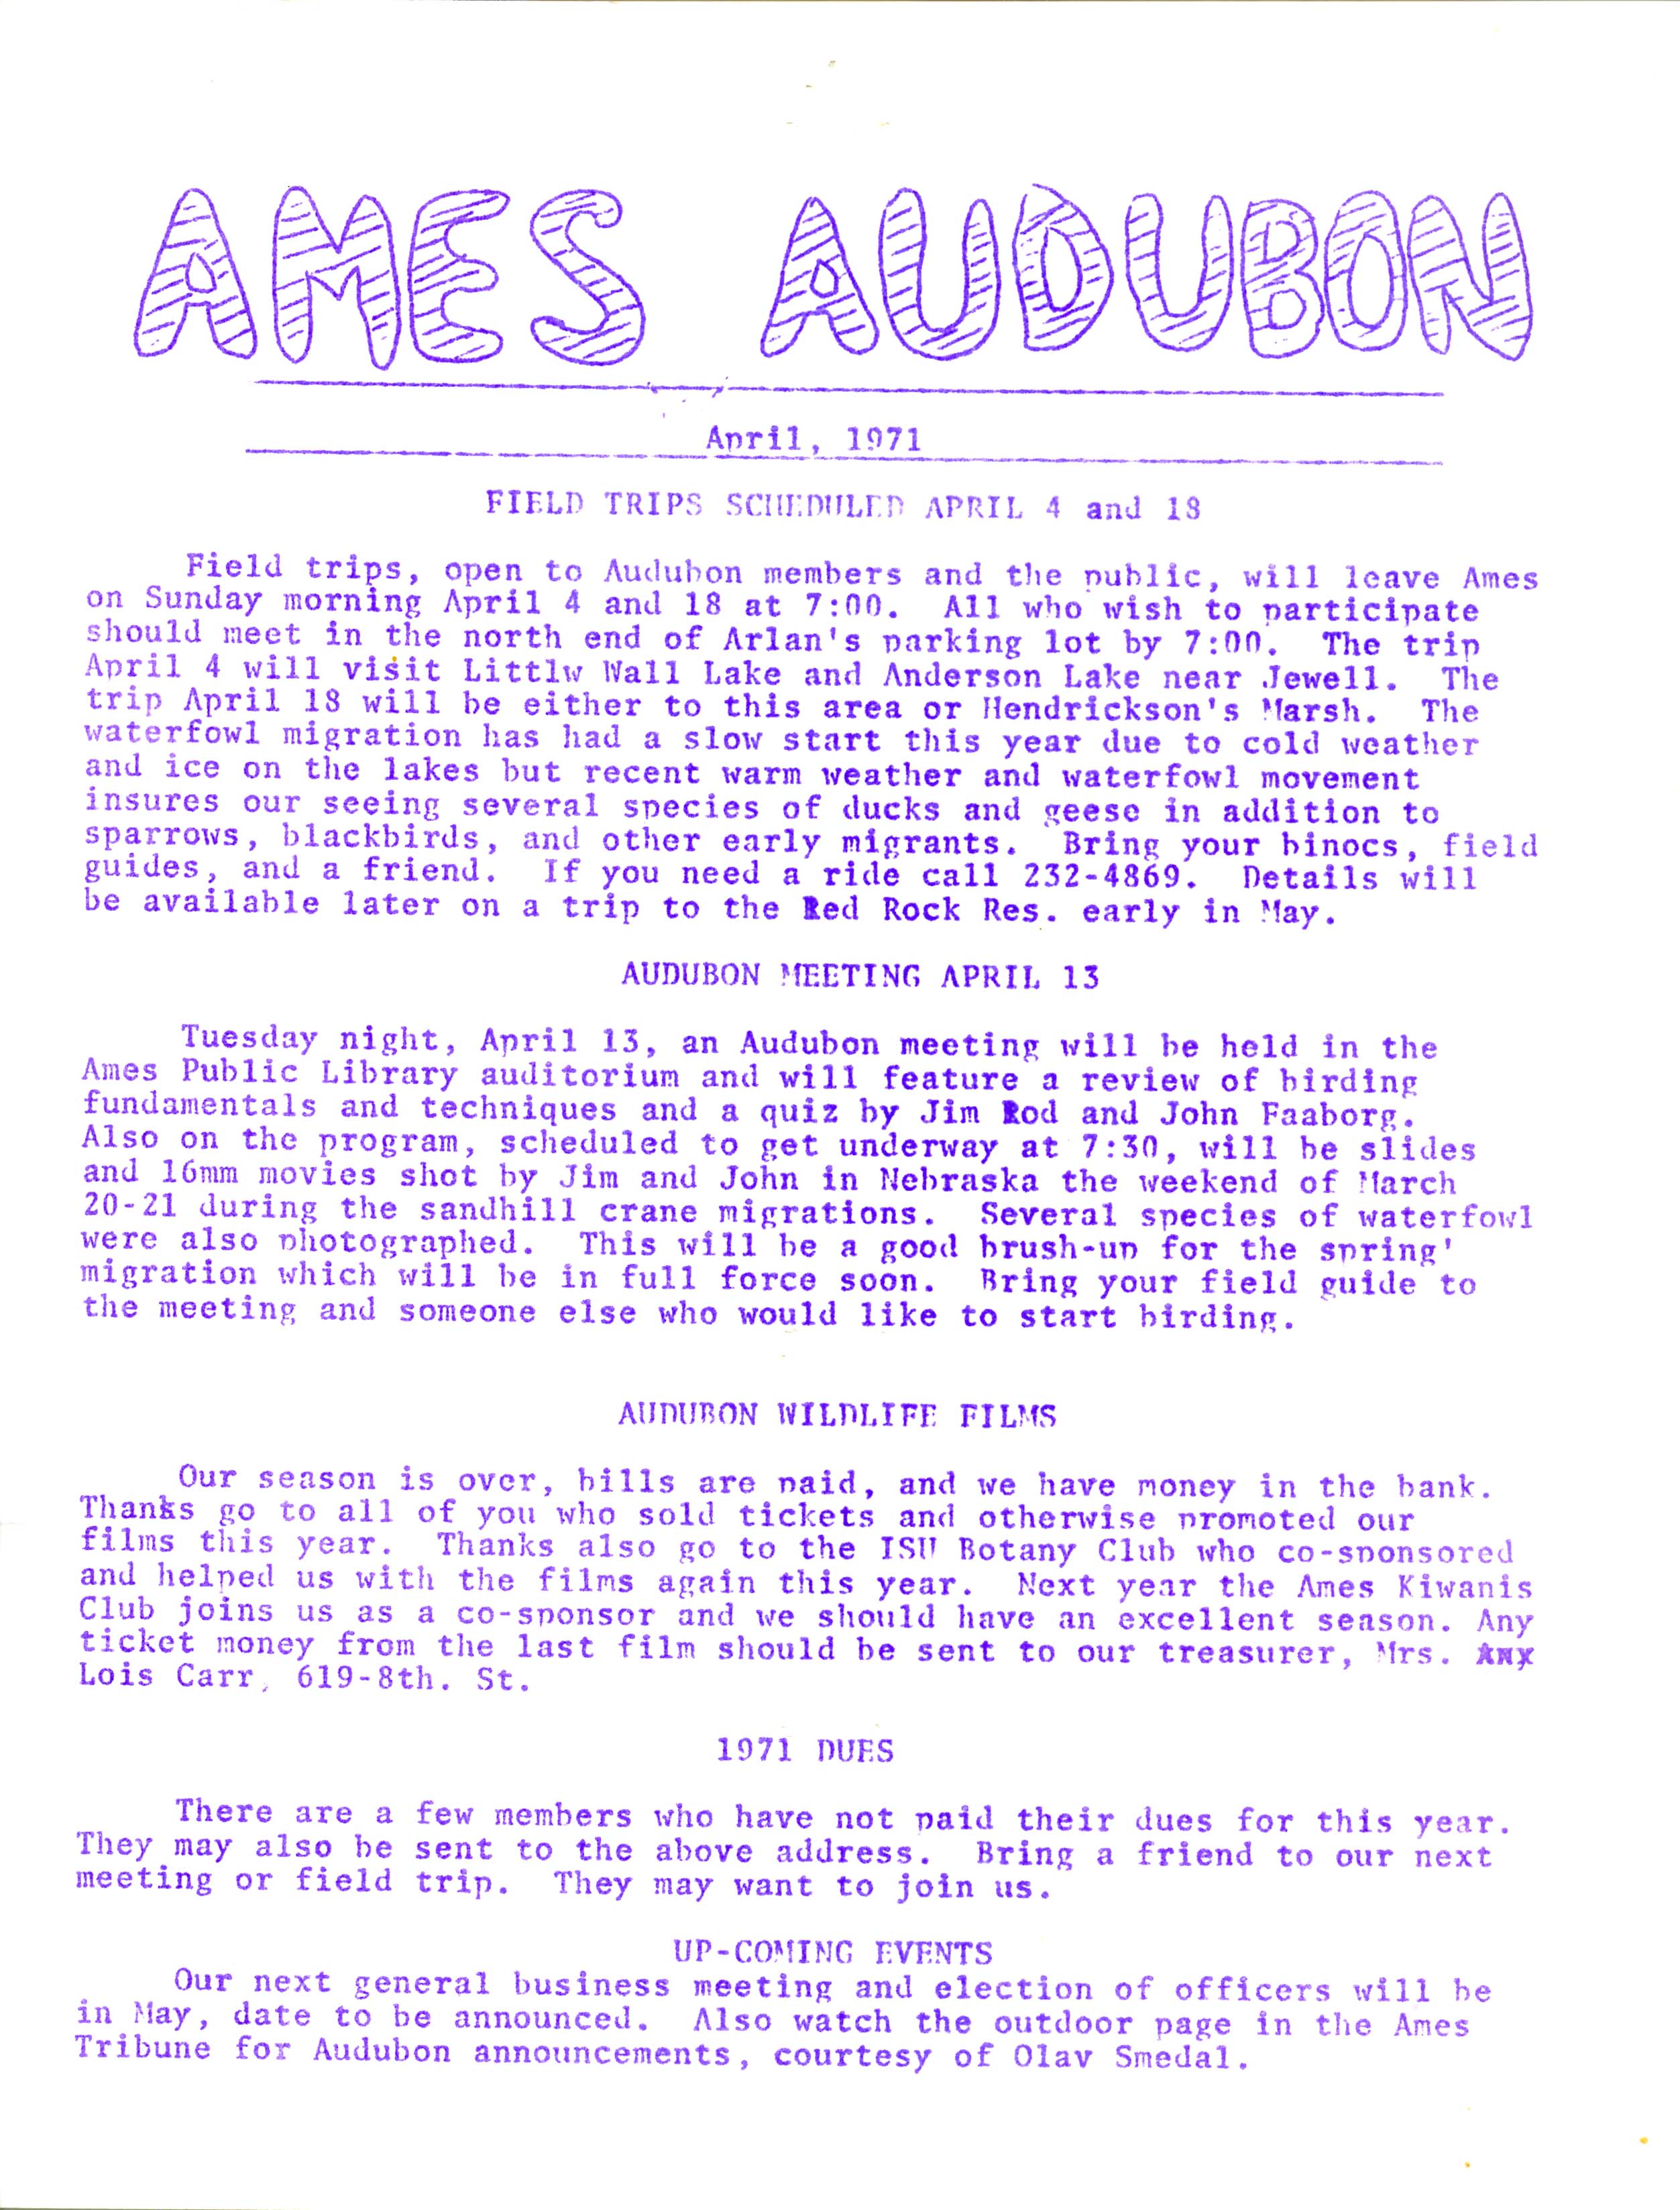 Ames Audubon, April 1971